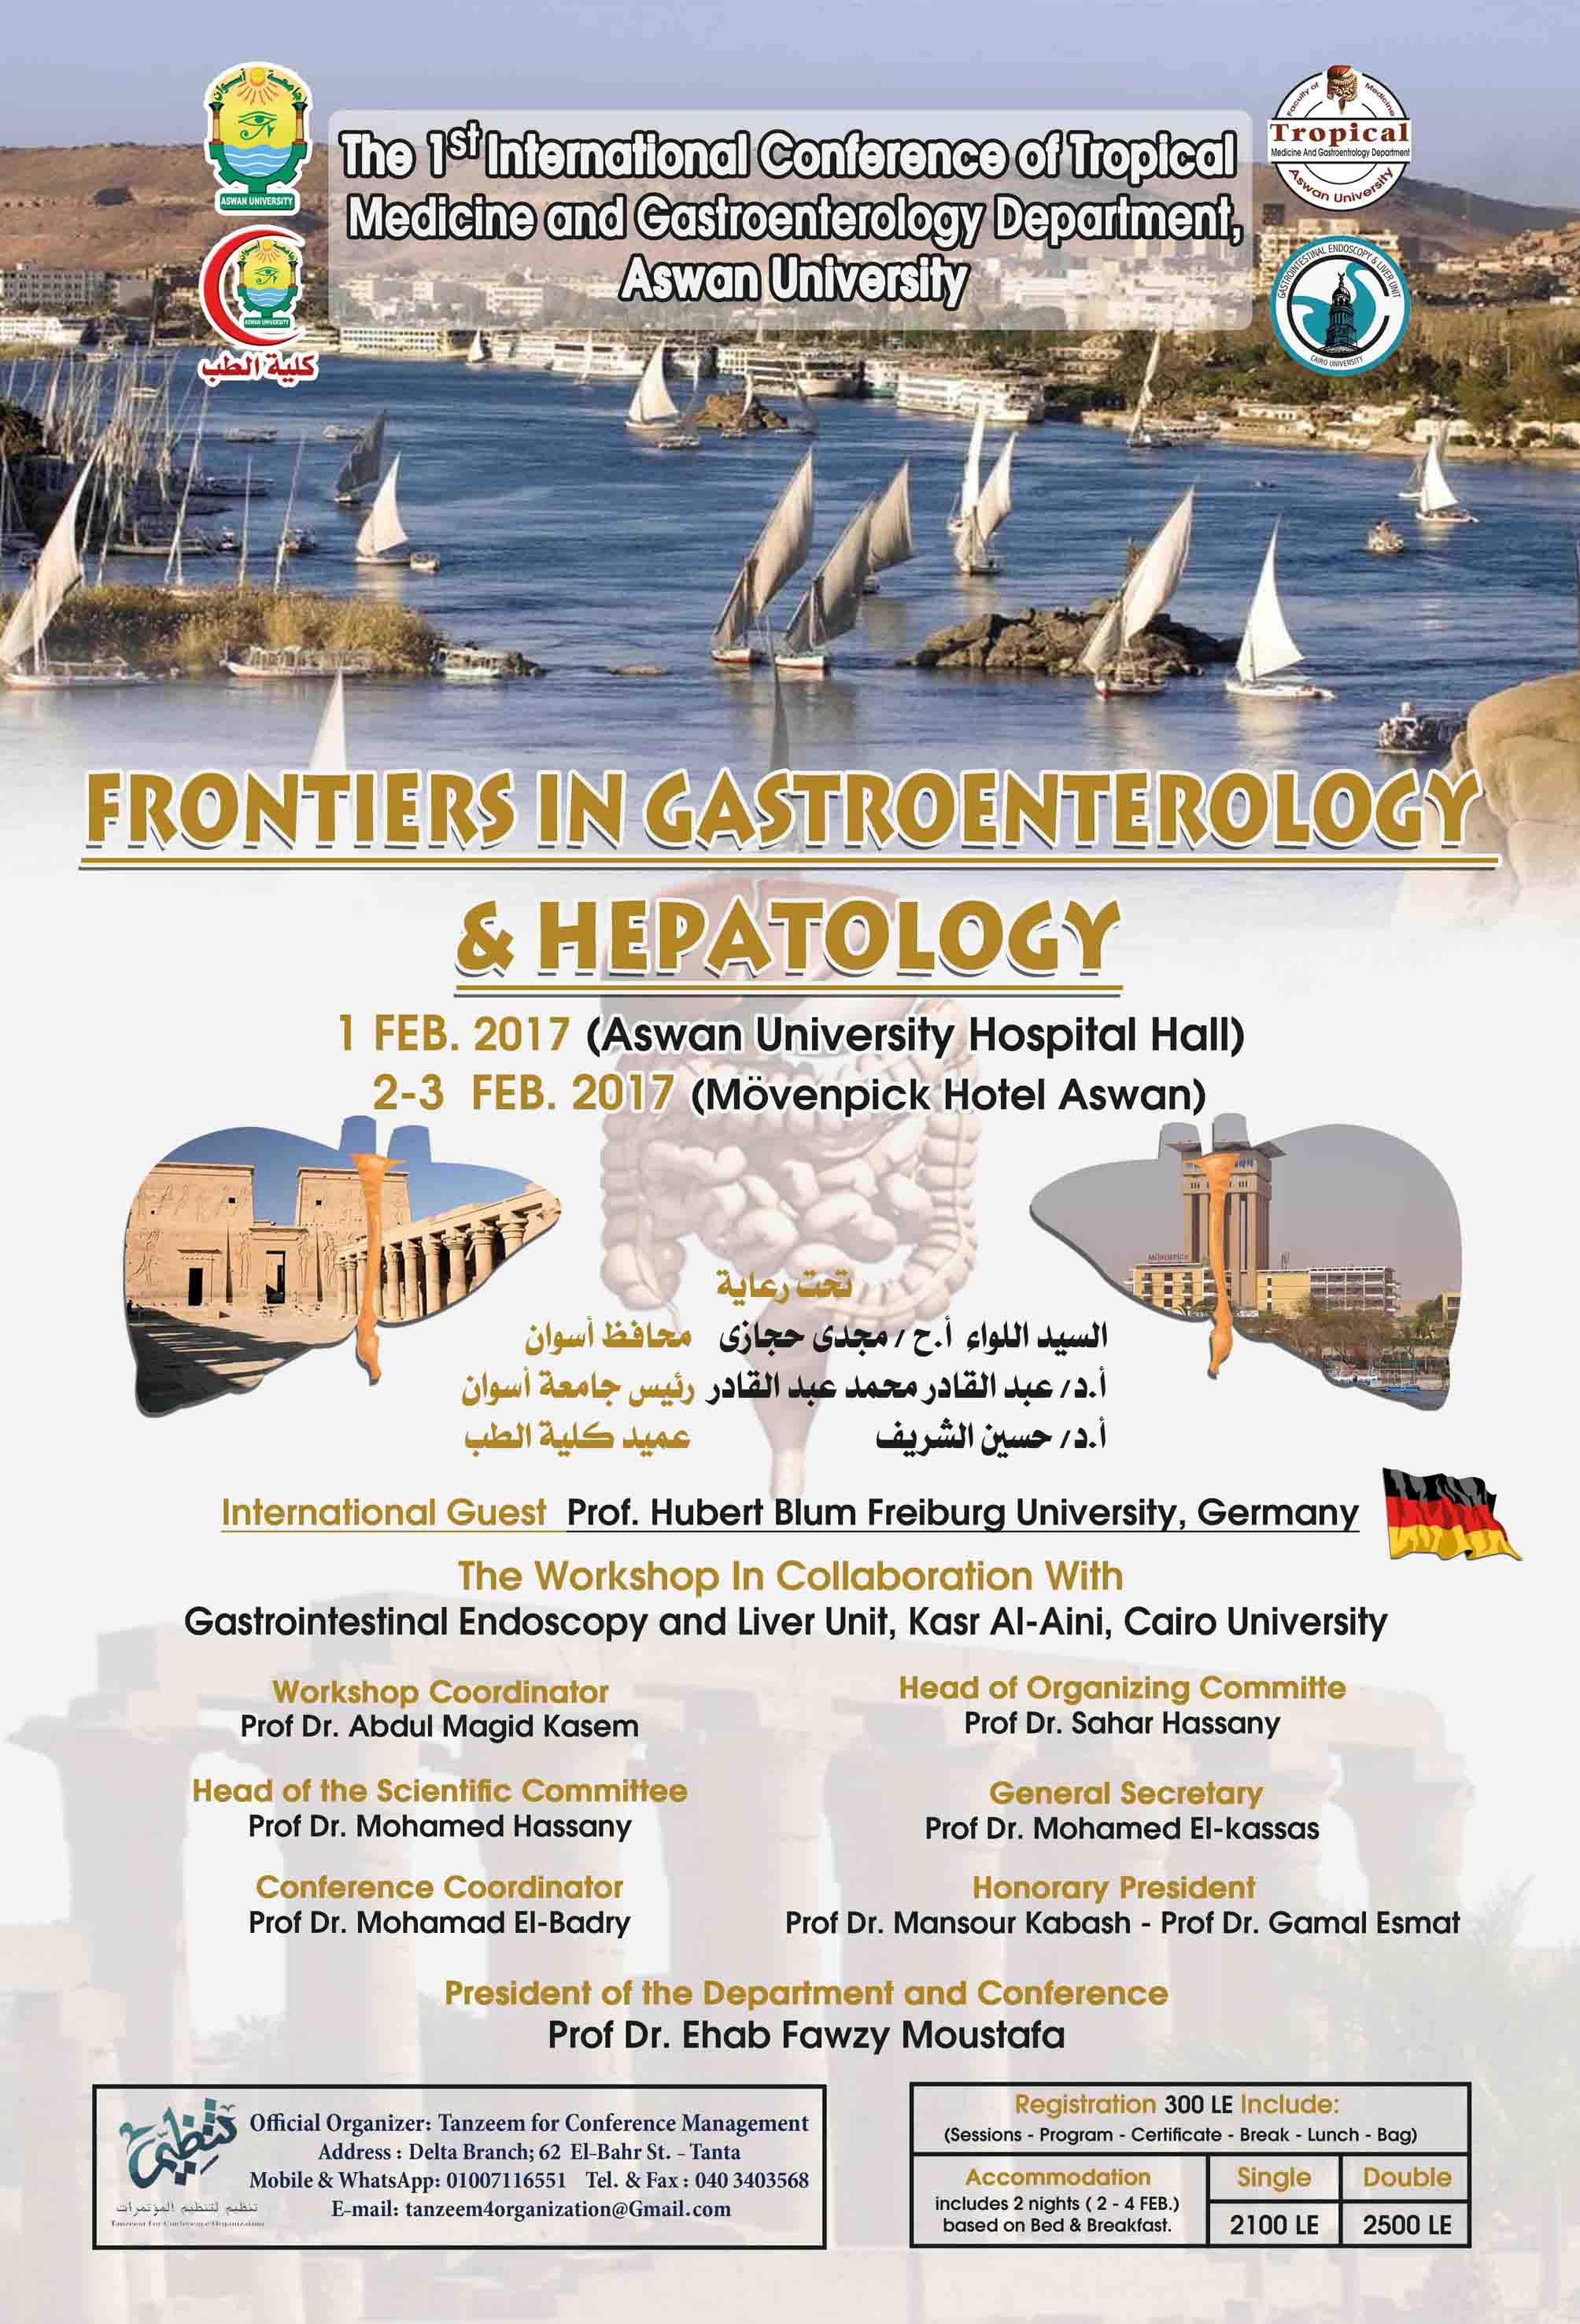 Frontiers in Gastroenterology & Hepatology